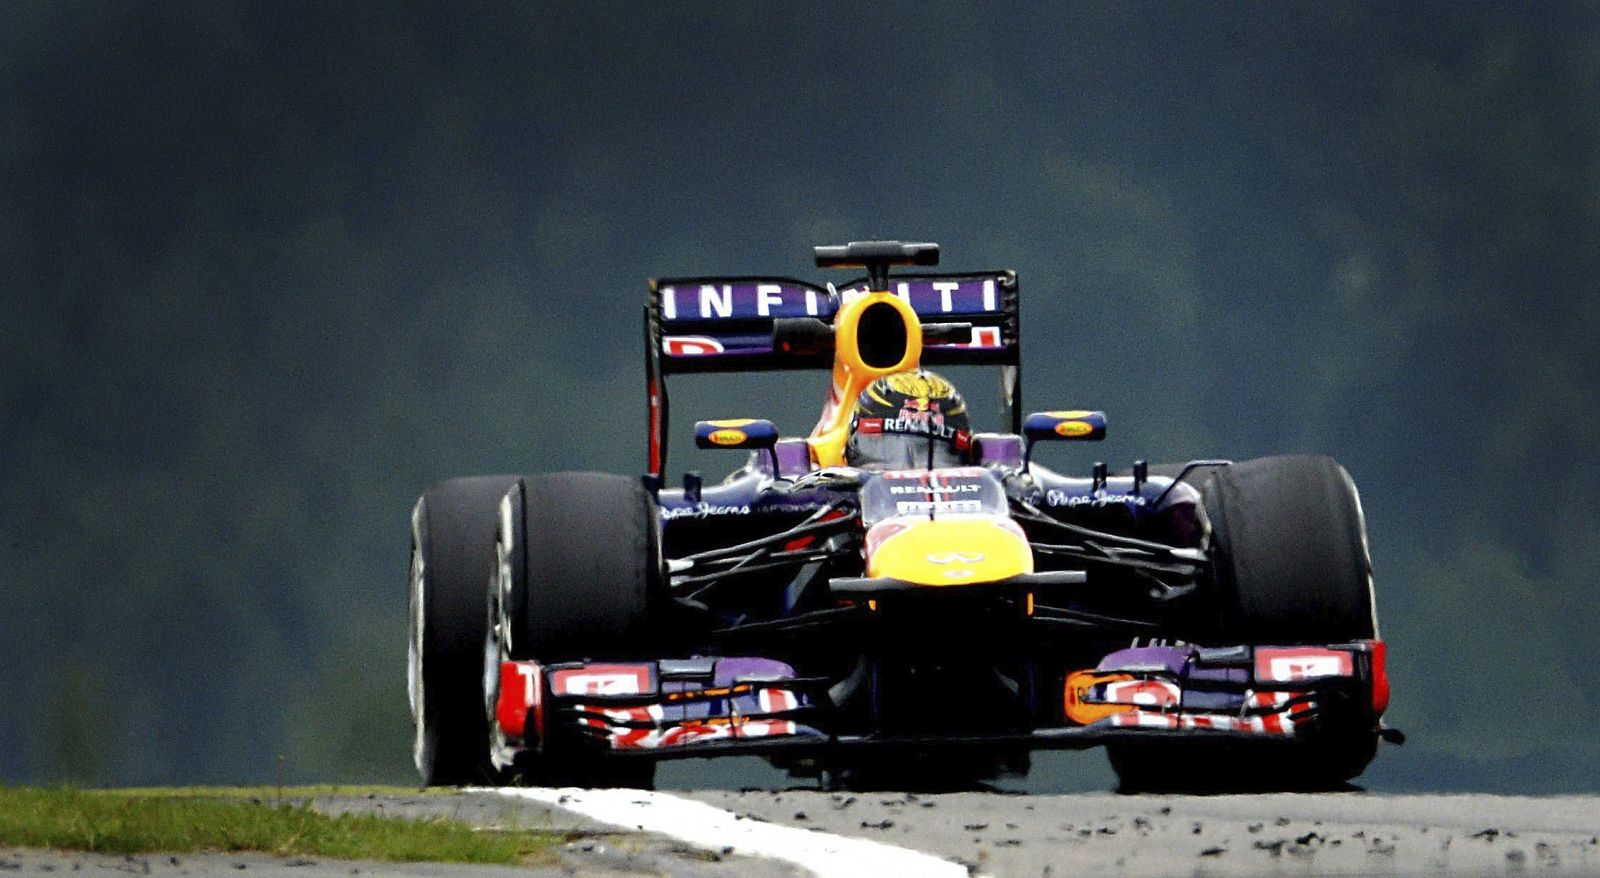 El piloto alemán de Fórmula Uno, Sebastian Vettel